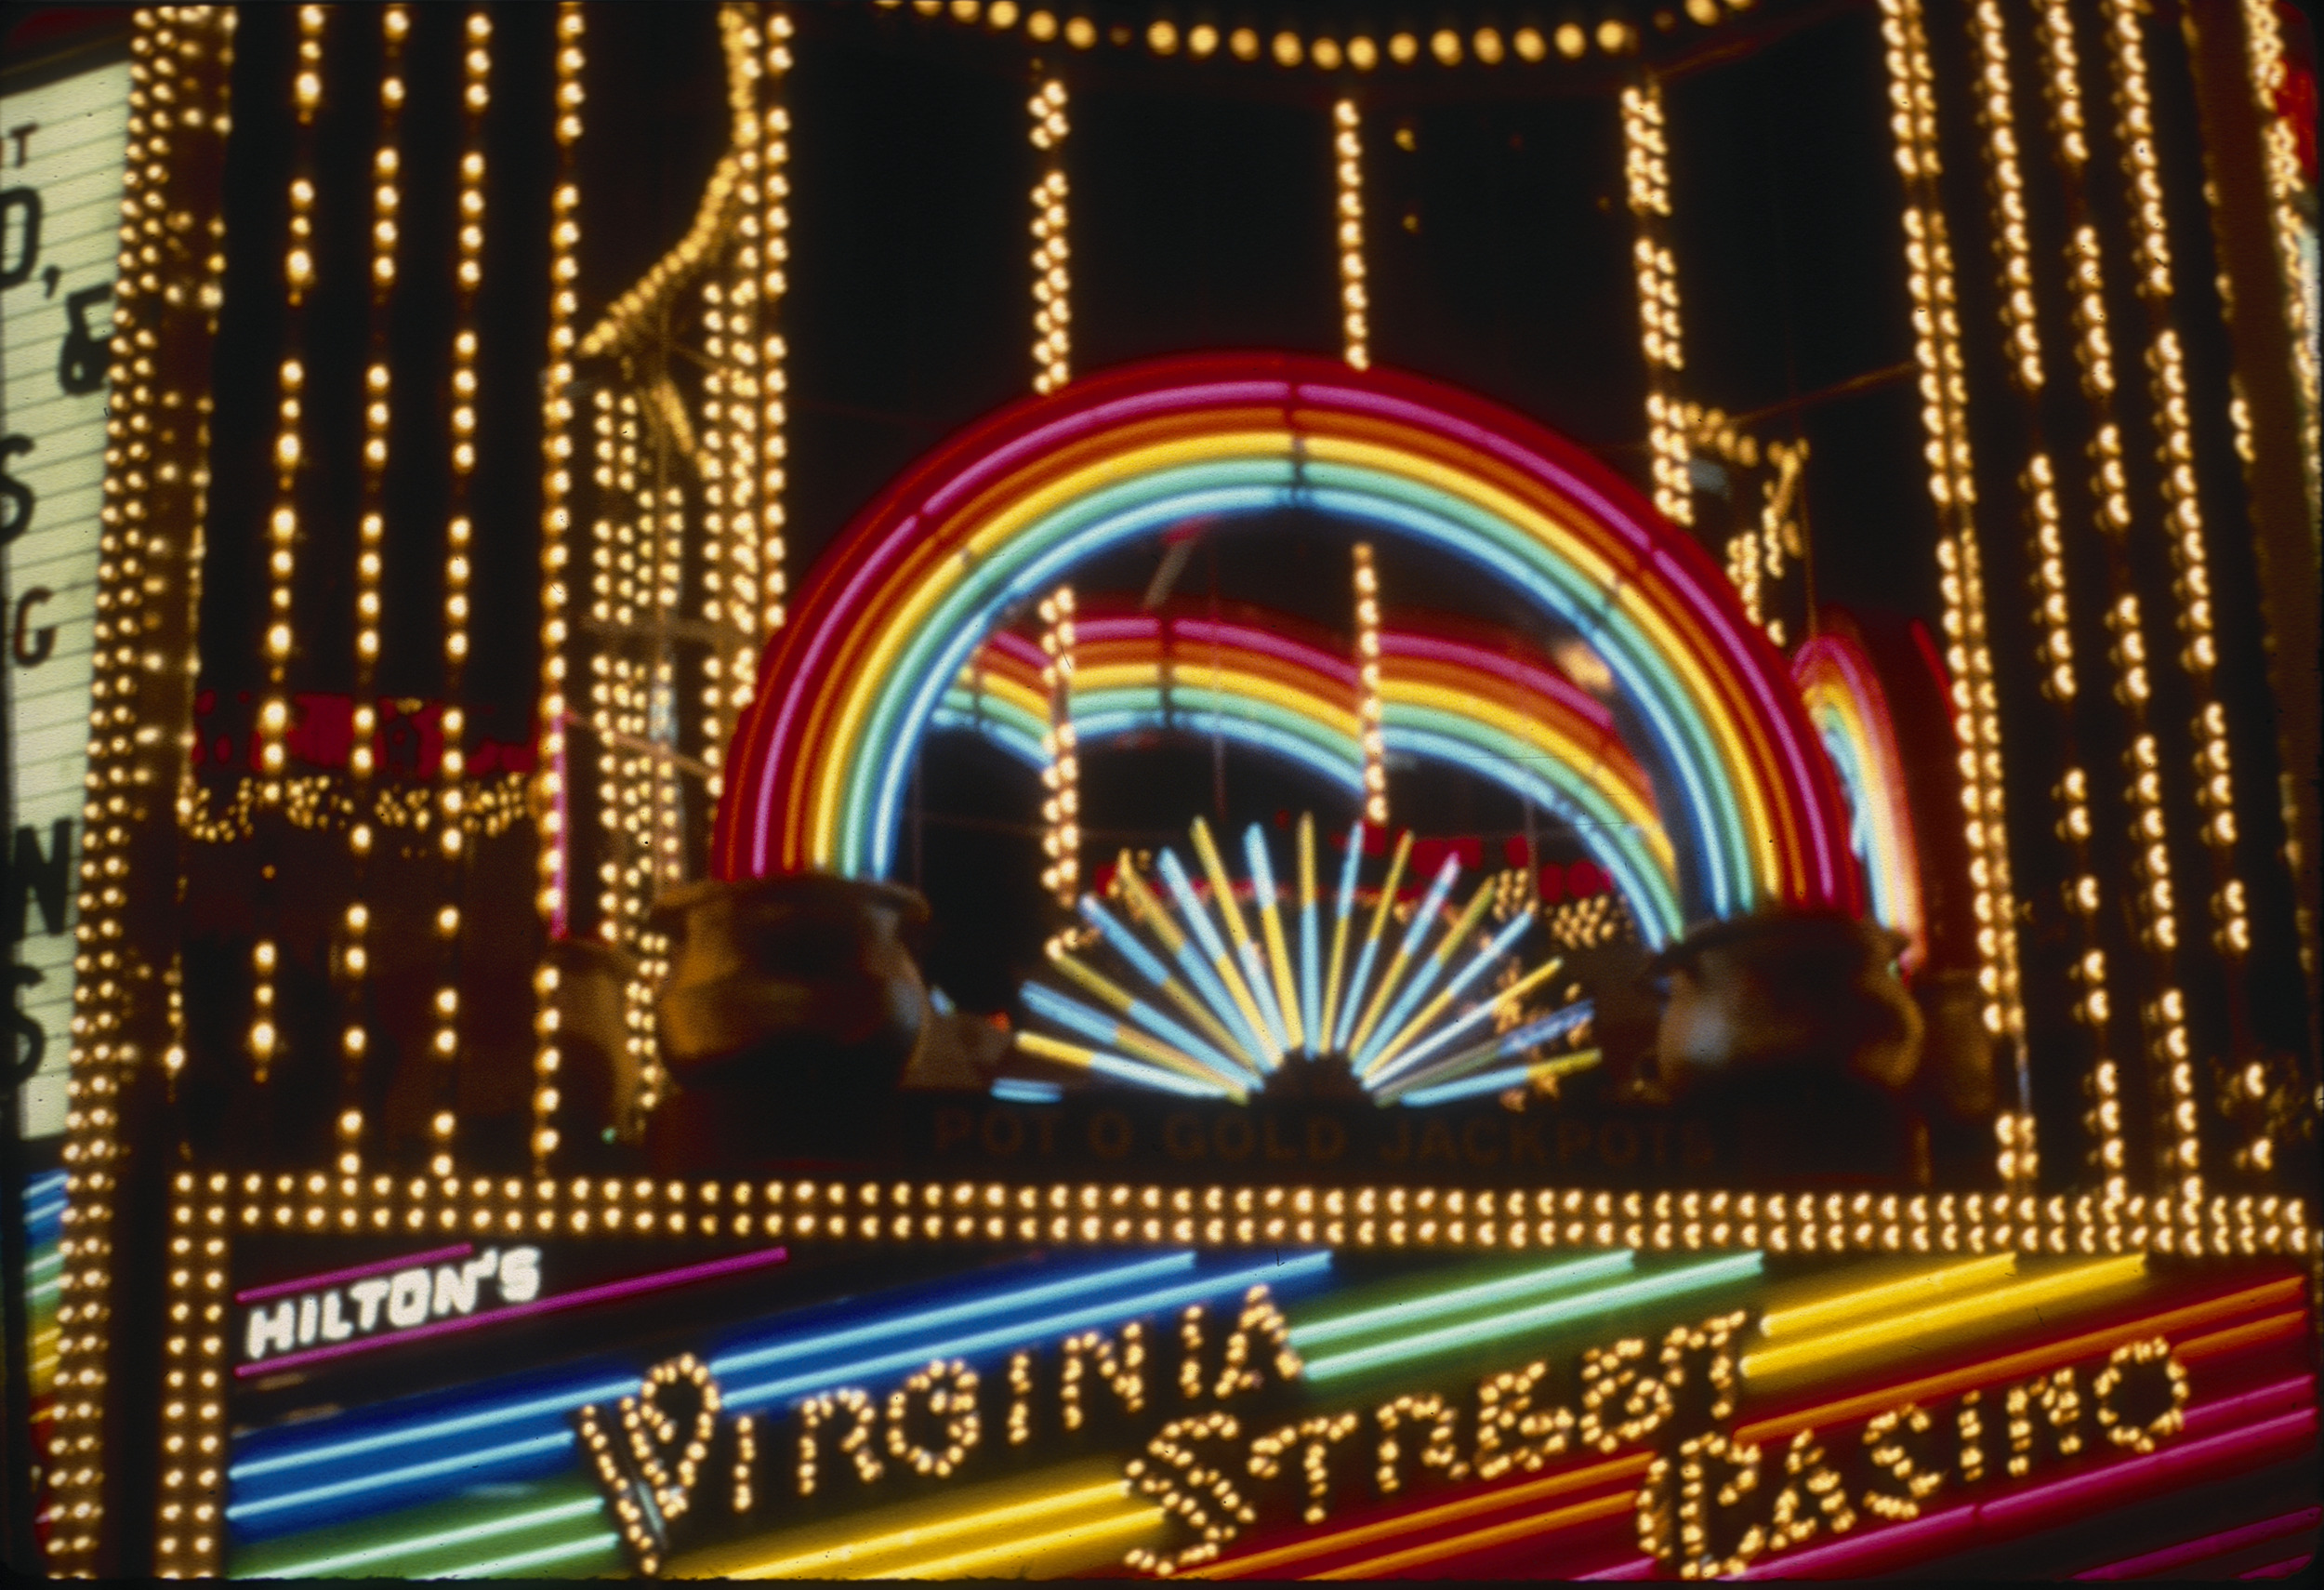 Slide of the neon sign for Hilton's Virginia Street Casino, Reno, Nevada, 1986